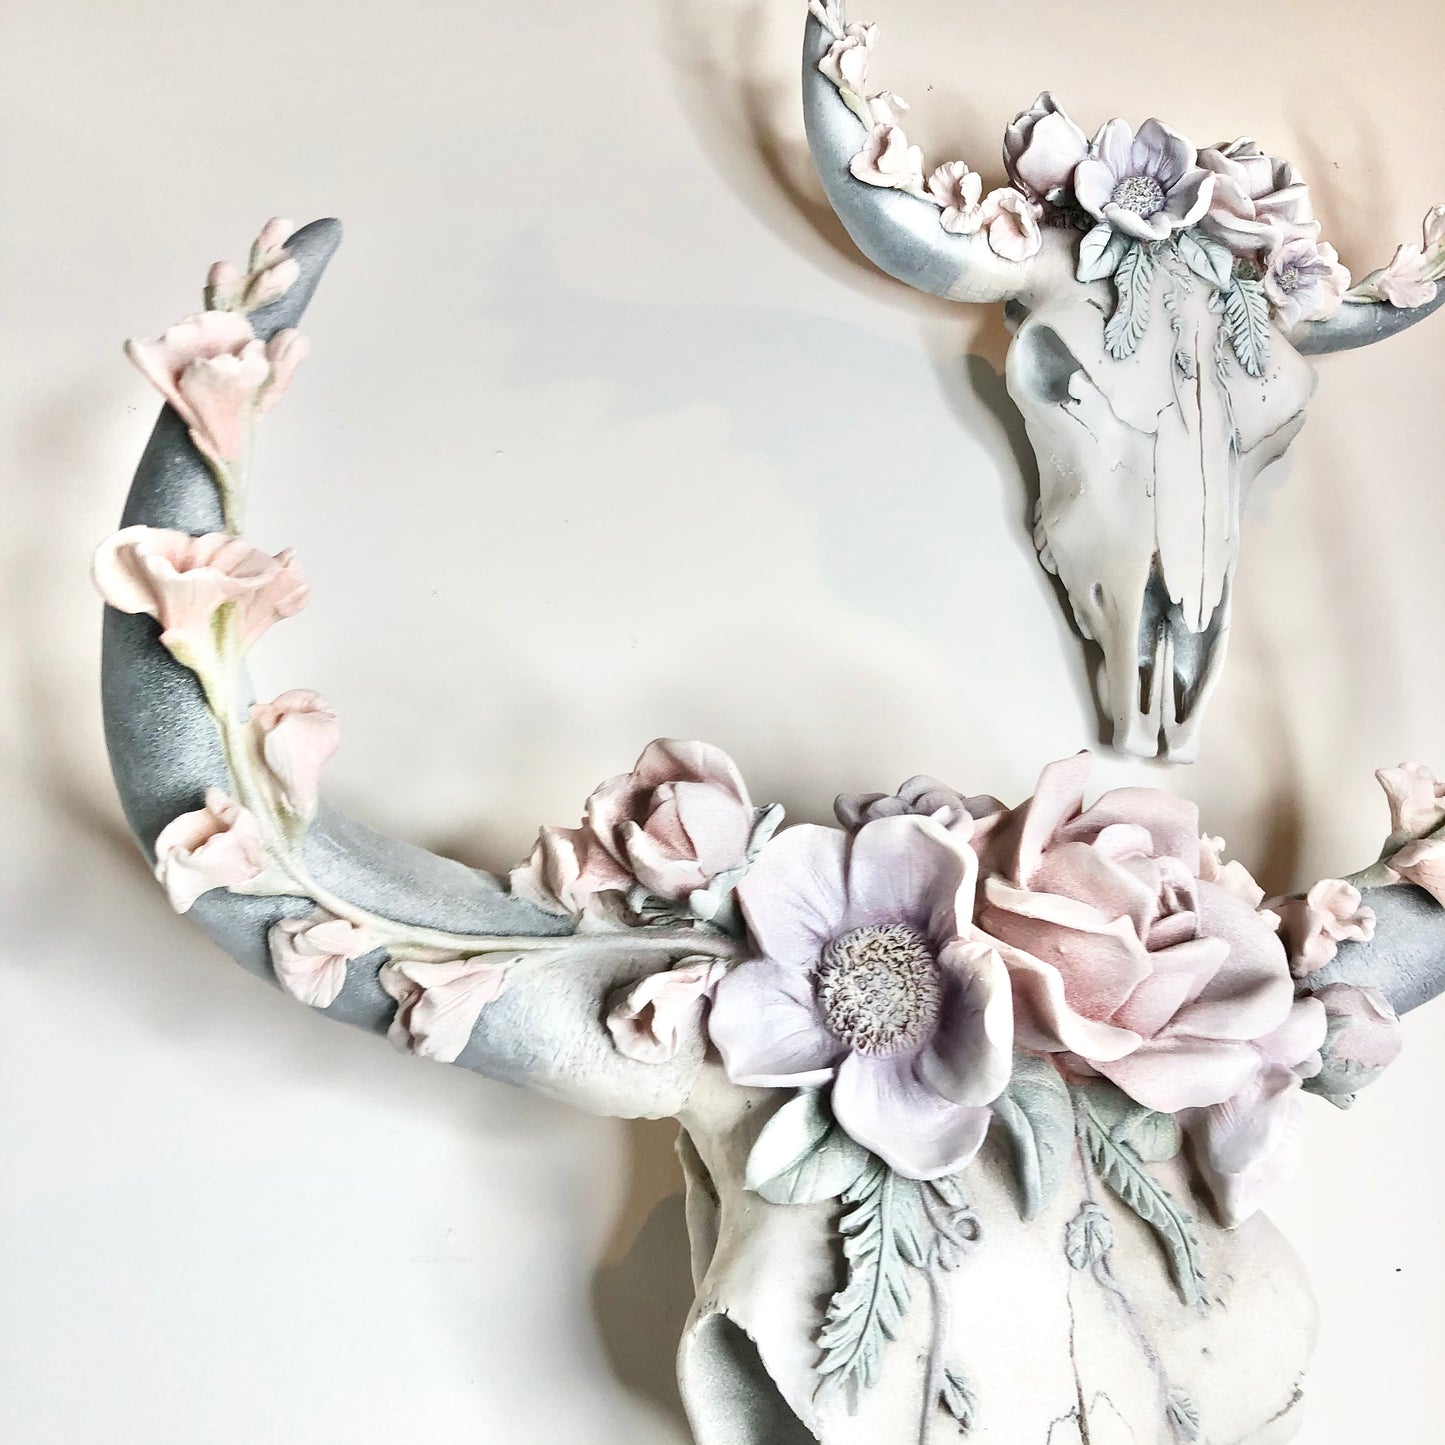 Bohemian flower crown cow / bull skull wall hanging